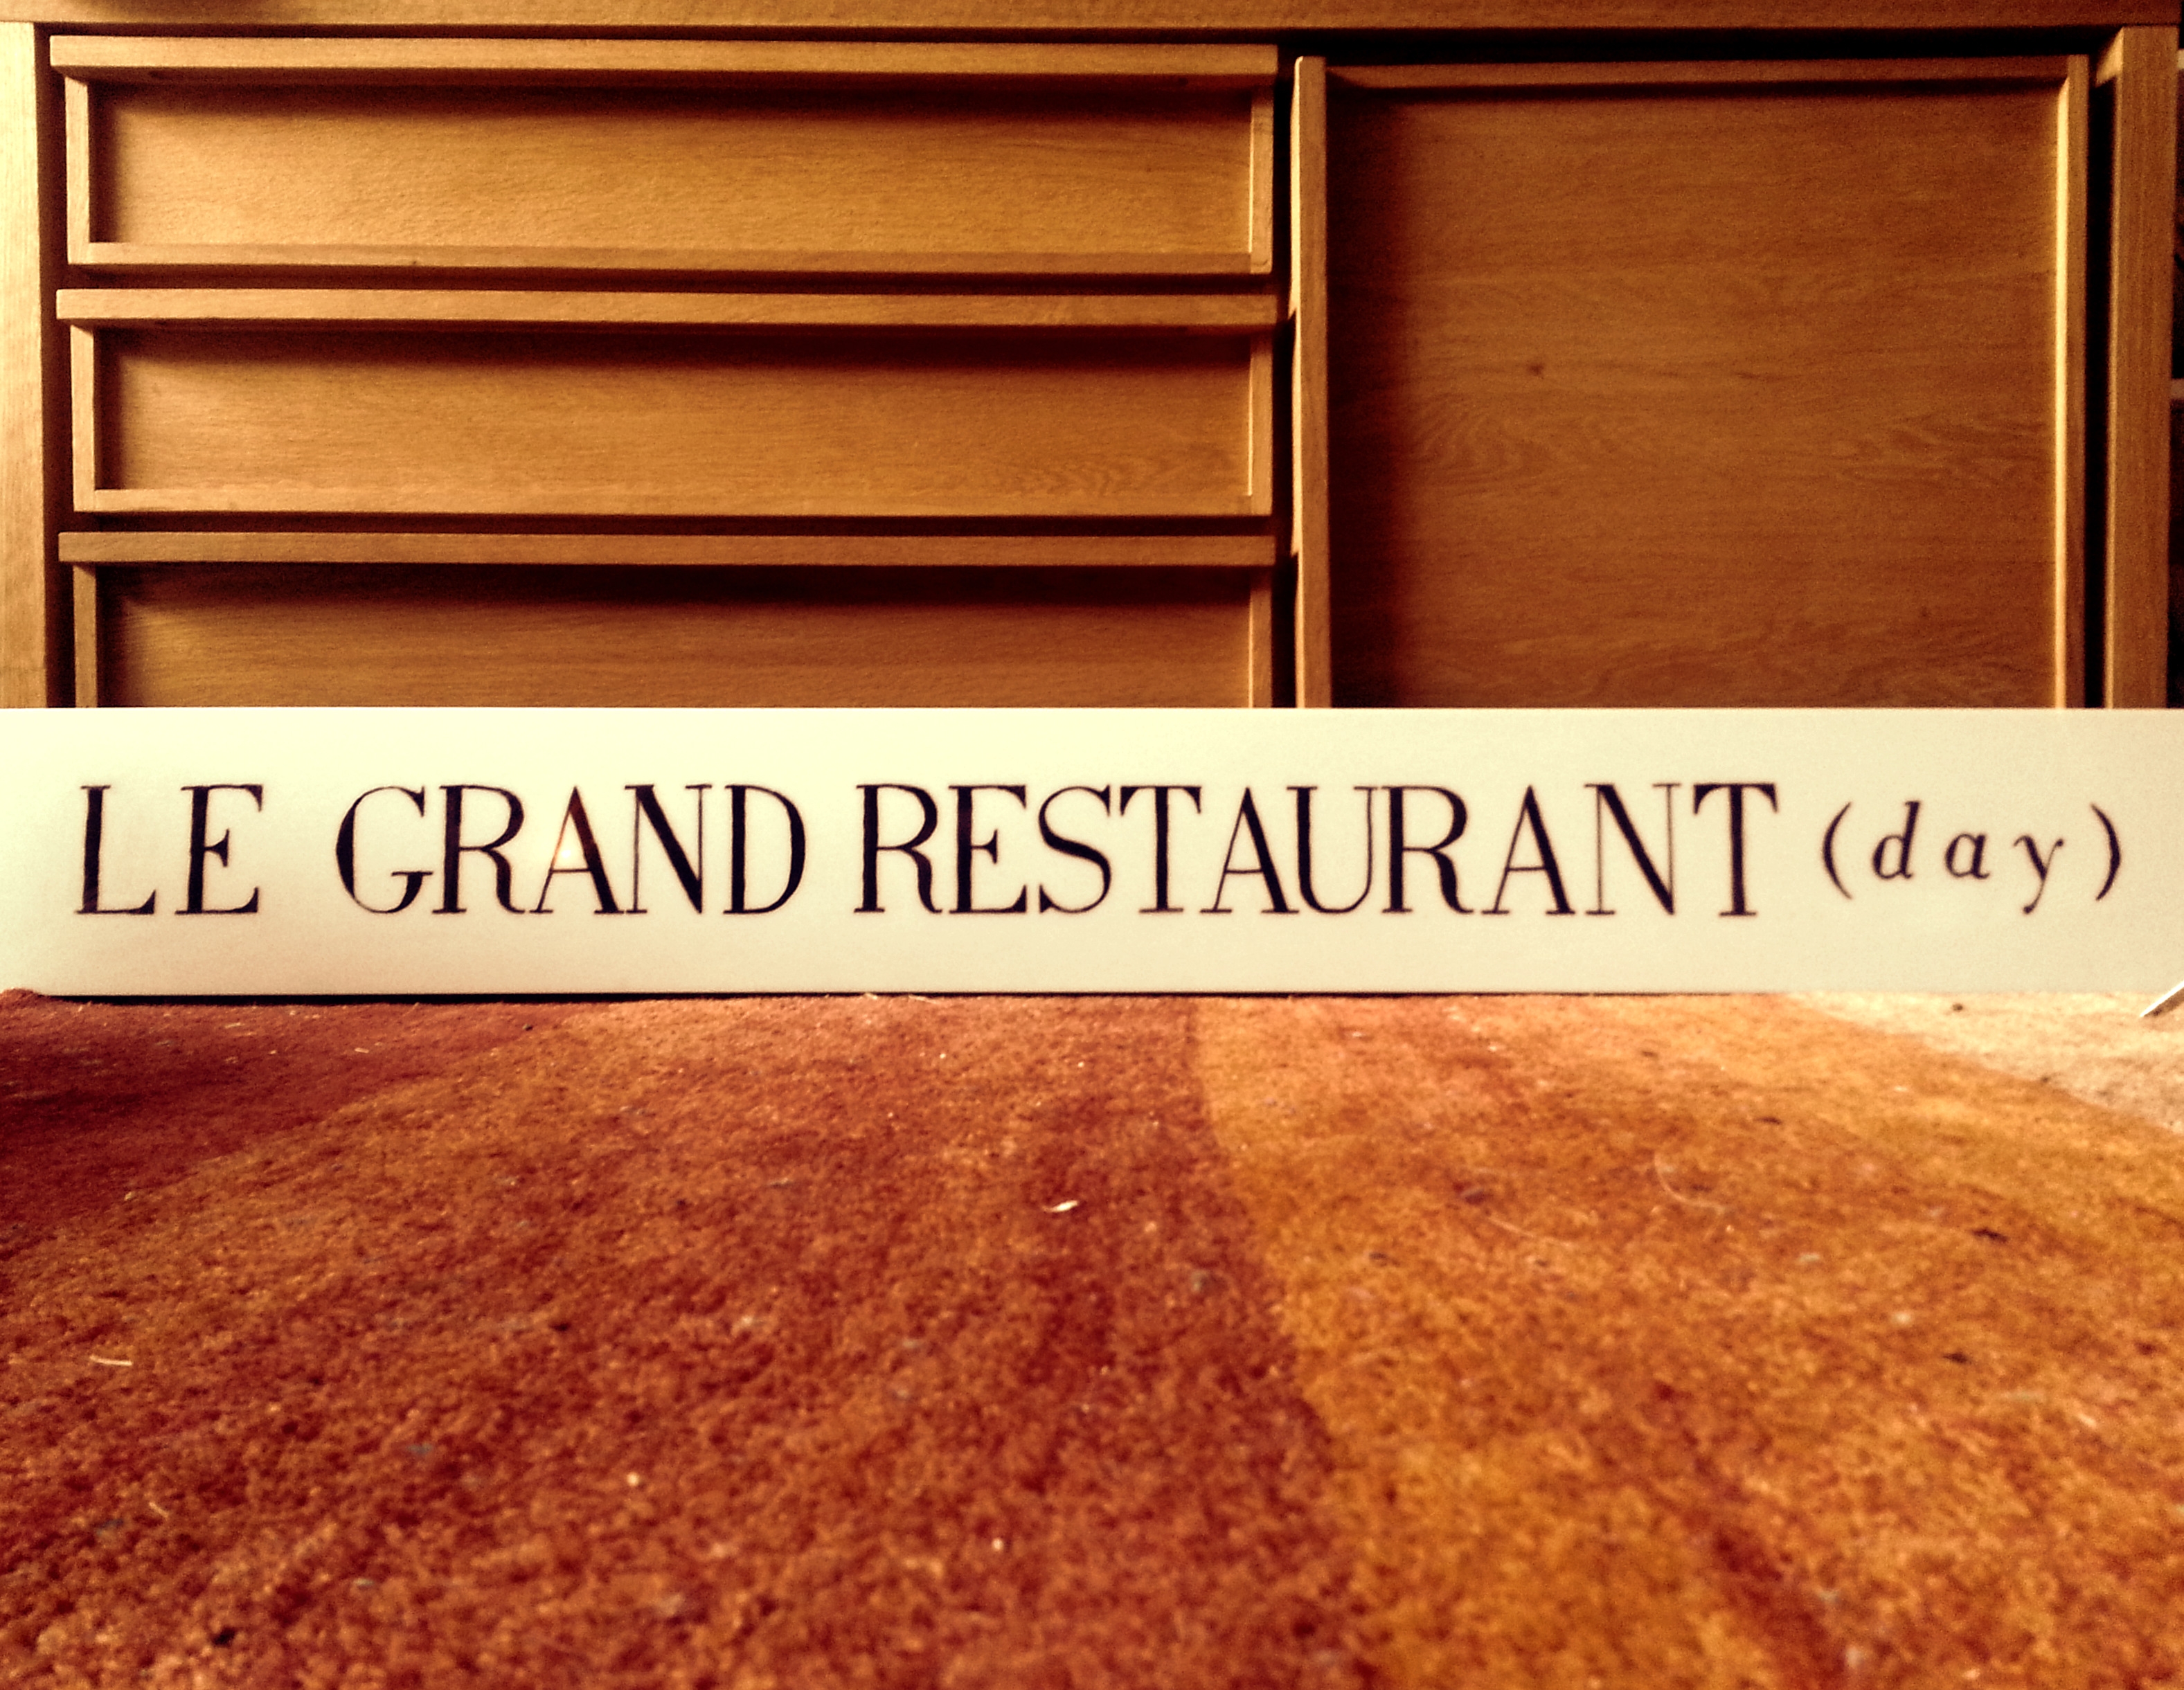 Le Grand Restaurant day